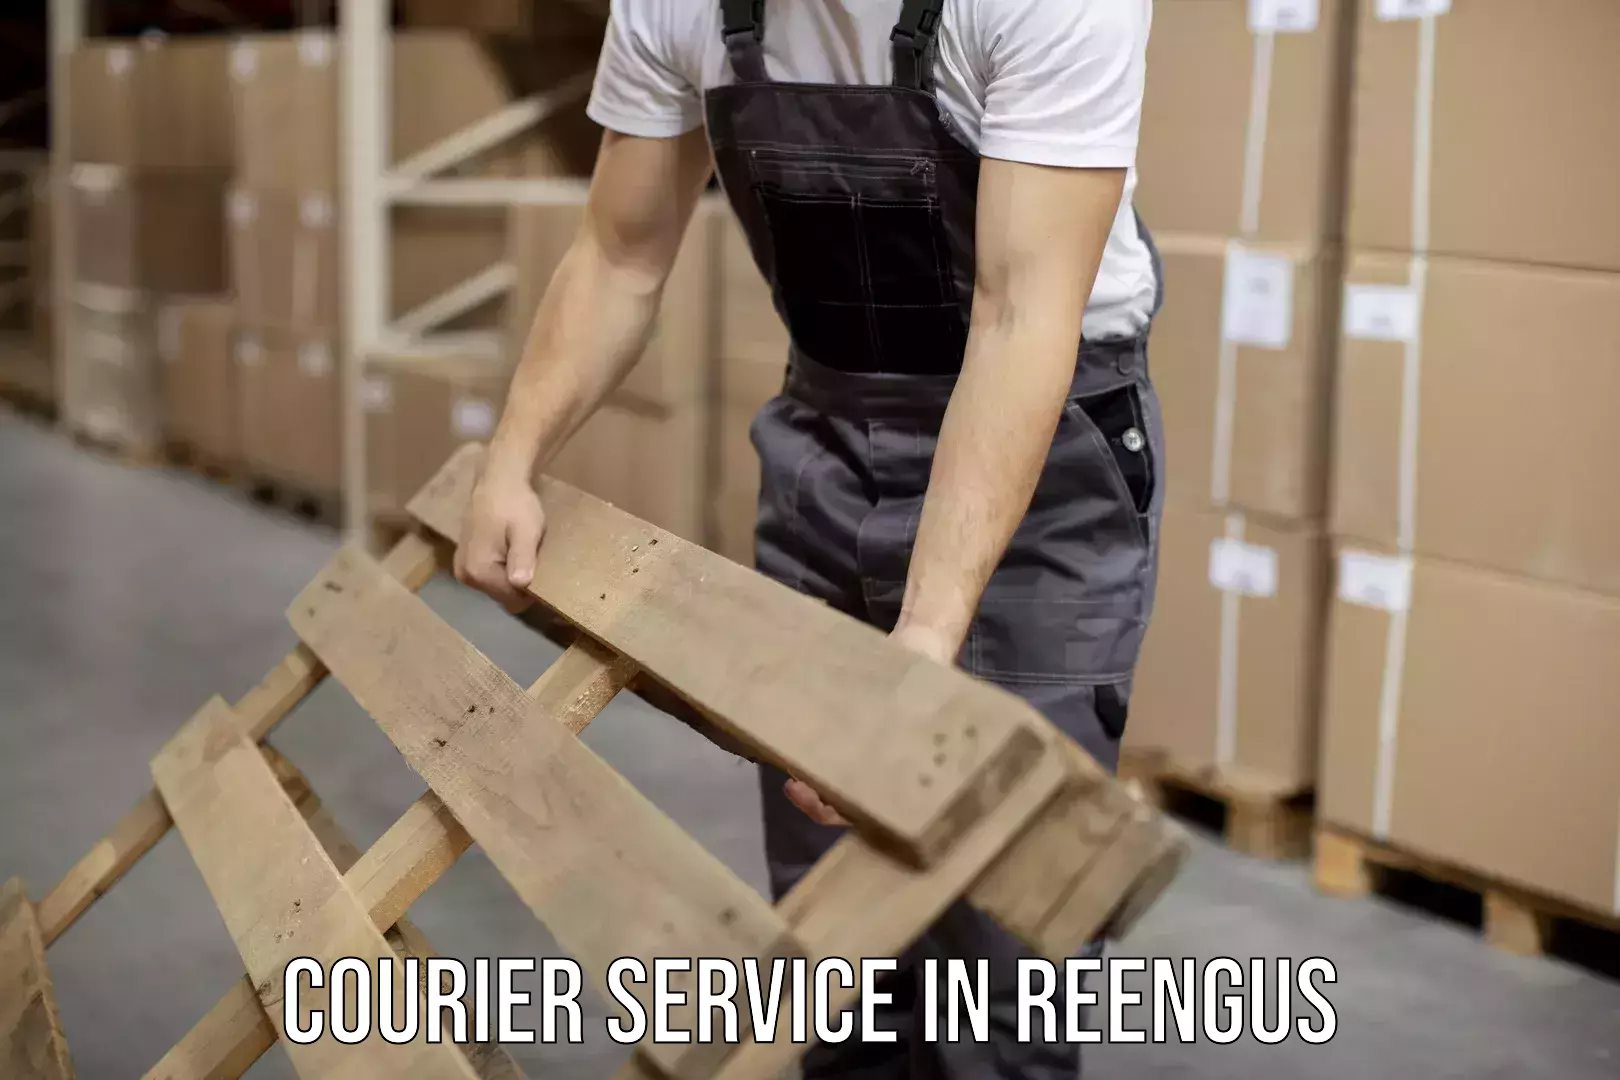 Modern delivery methods in Reengus